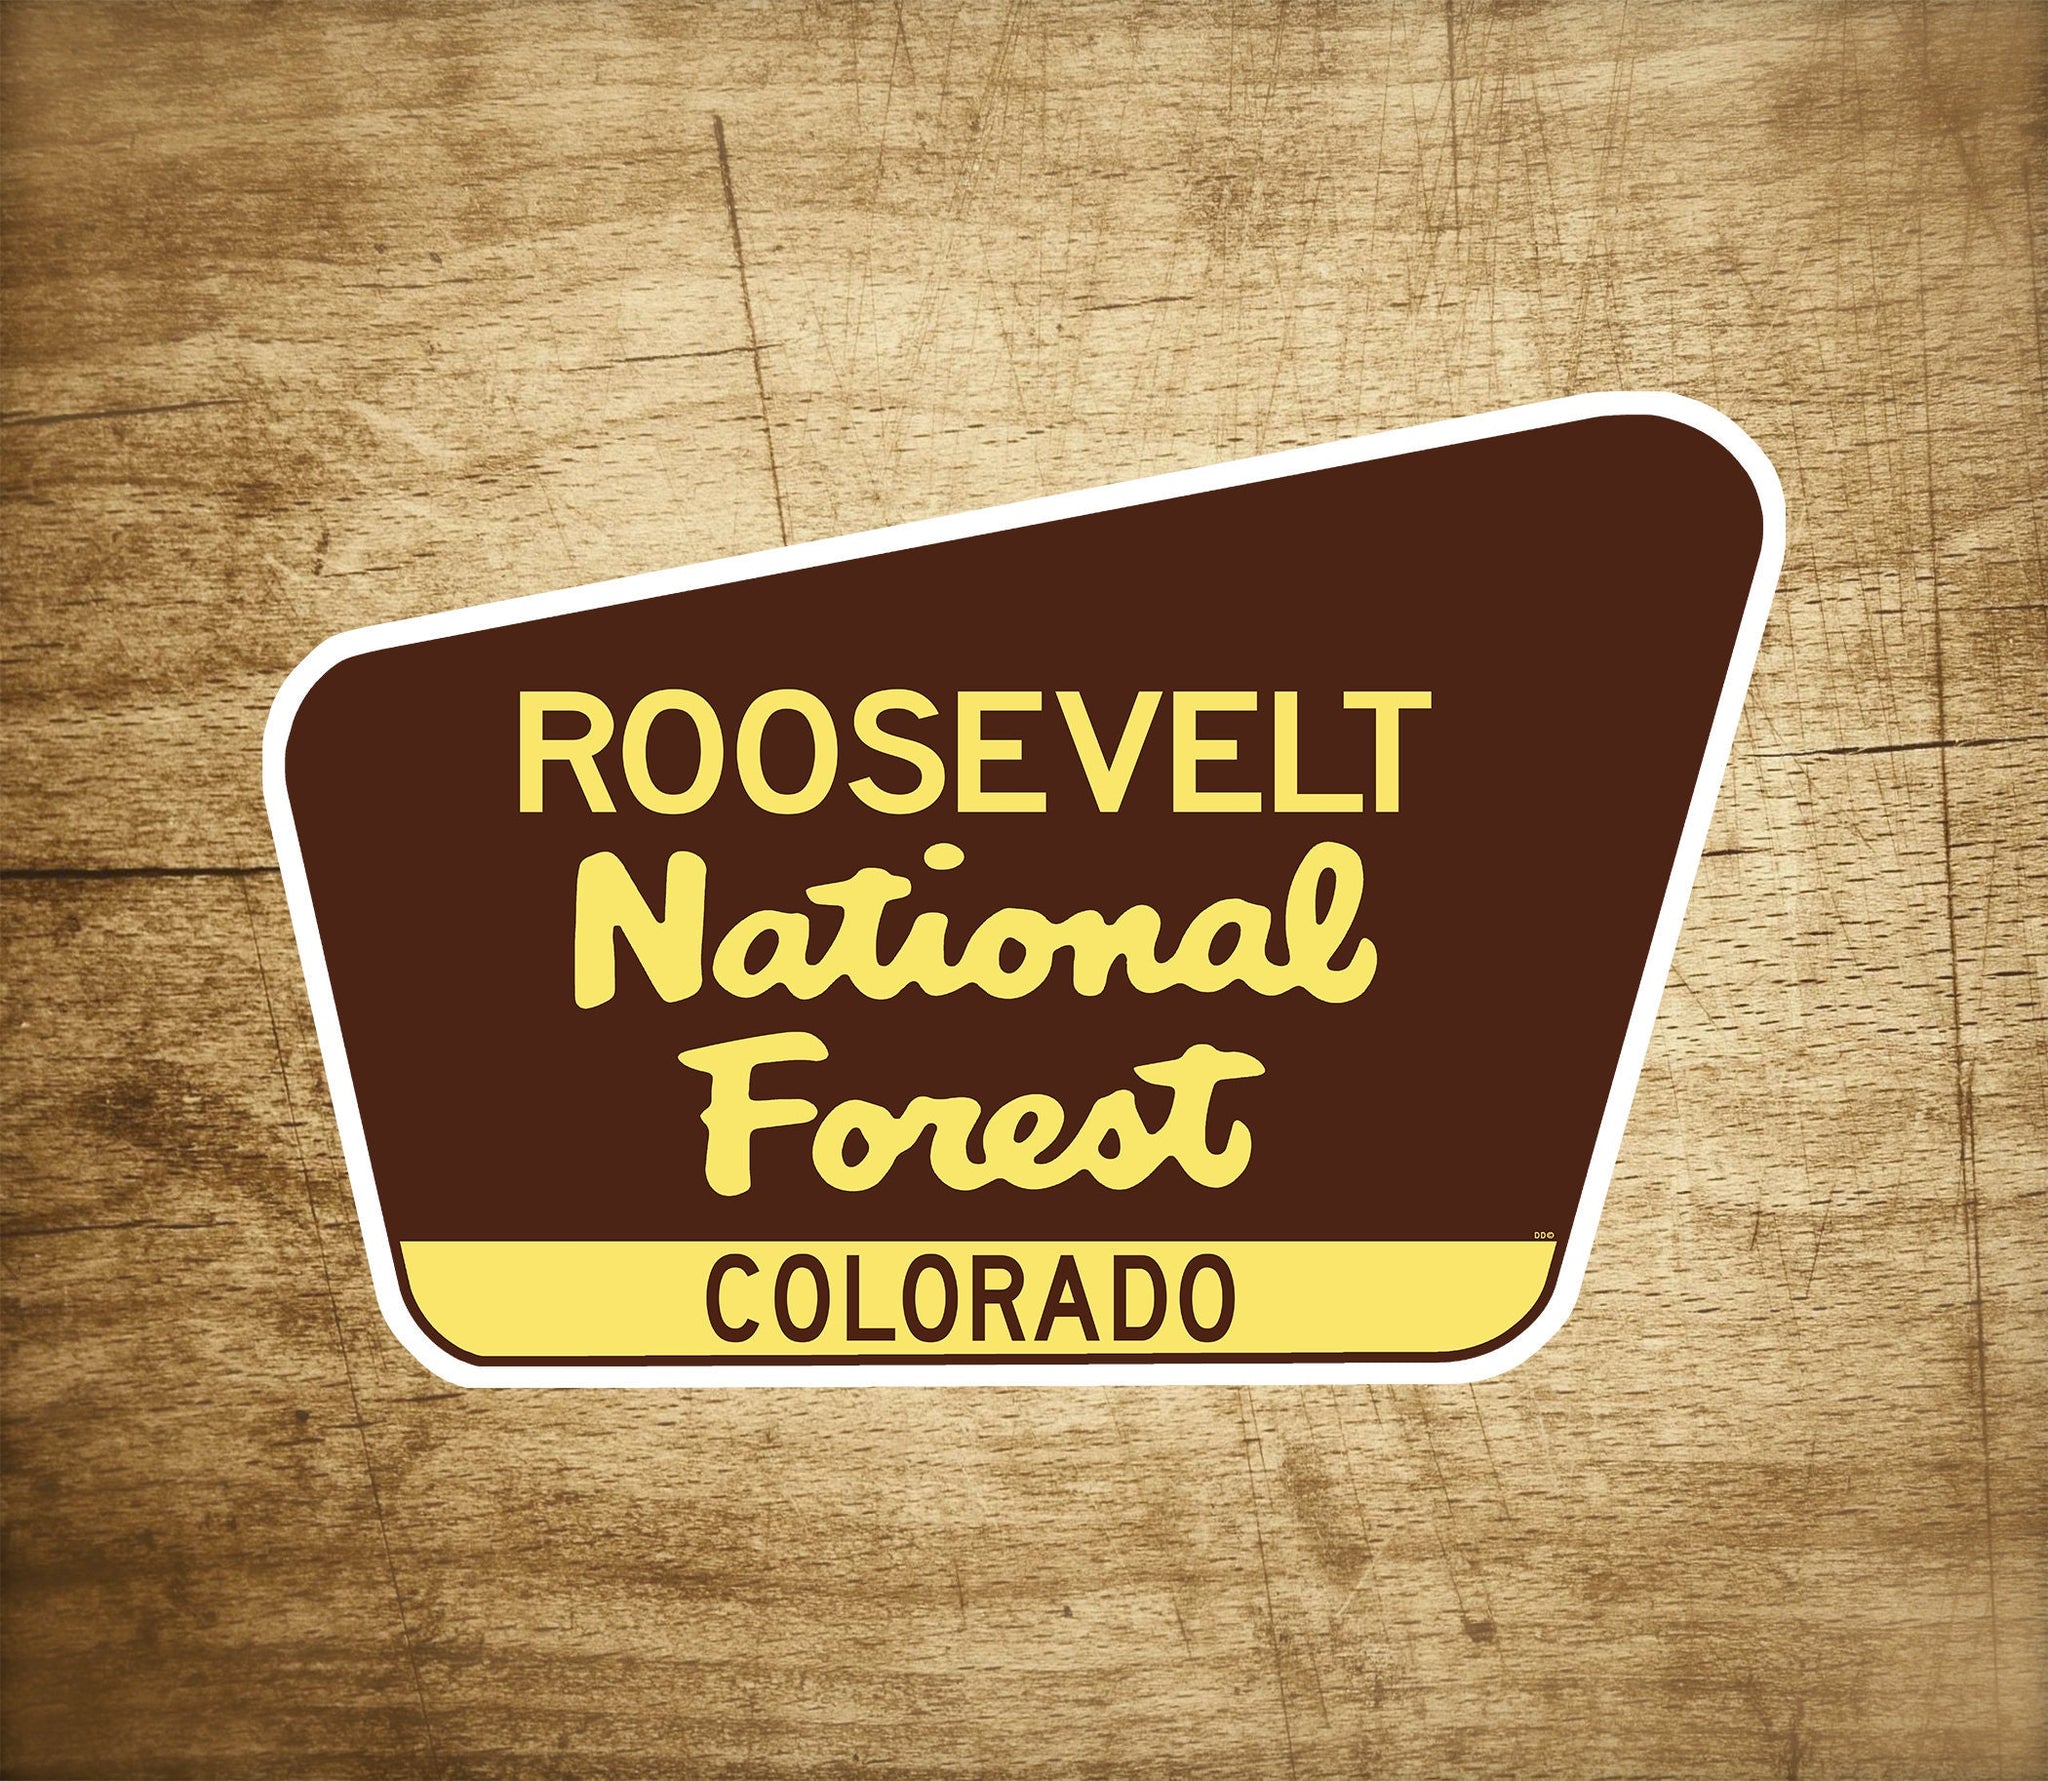 Roosevelt National Forest Decal Sticker 3.75" x 2.5" Colorado Park Vinyl